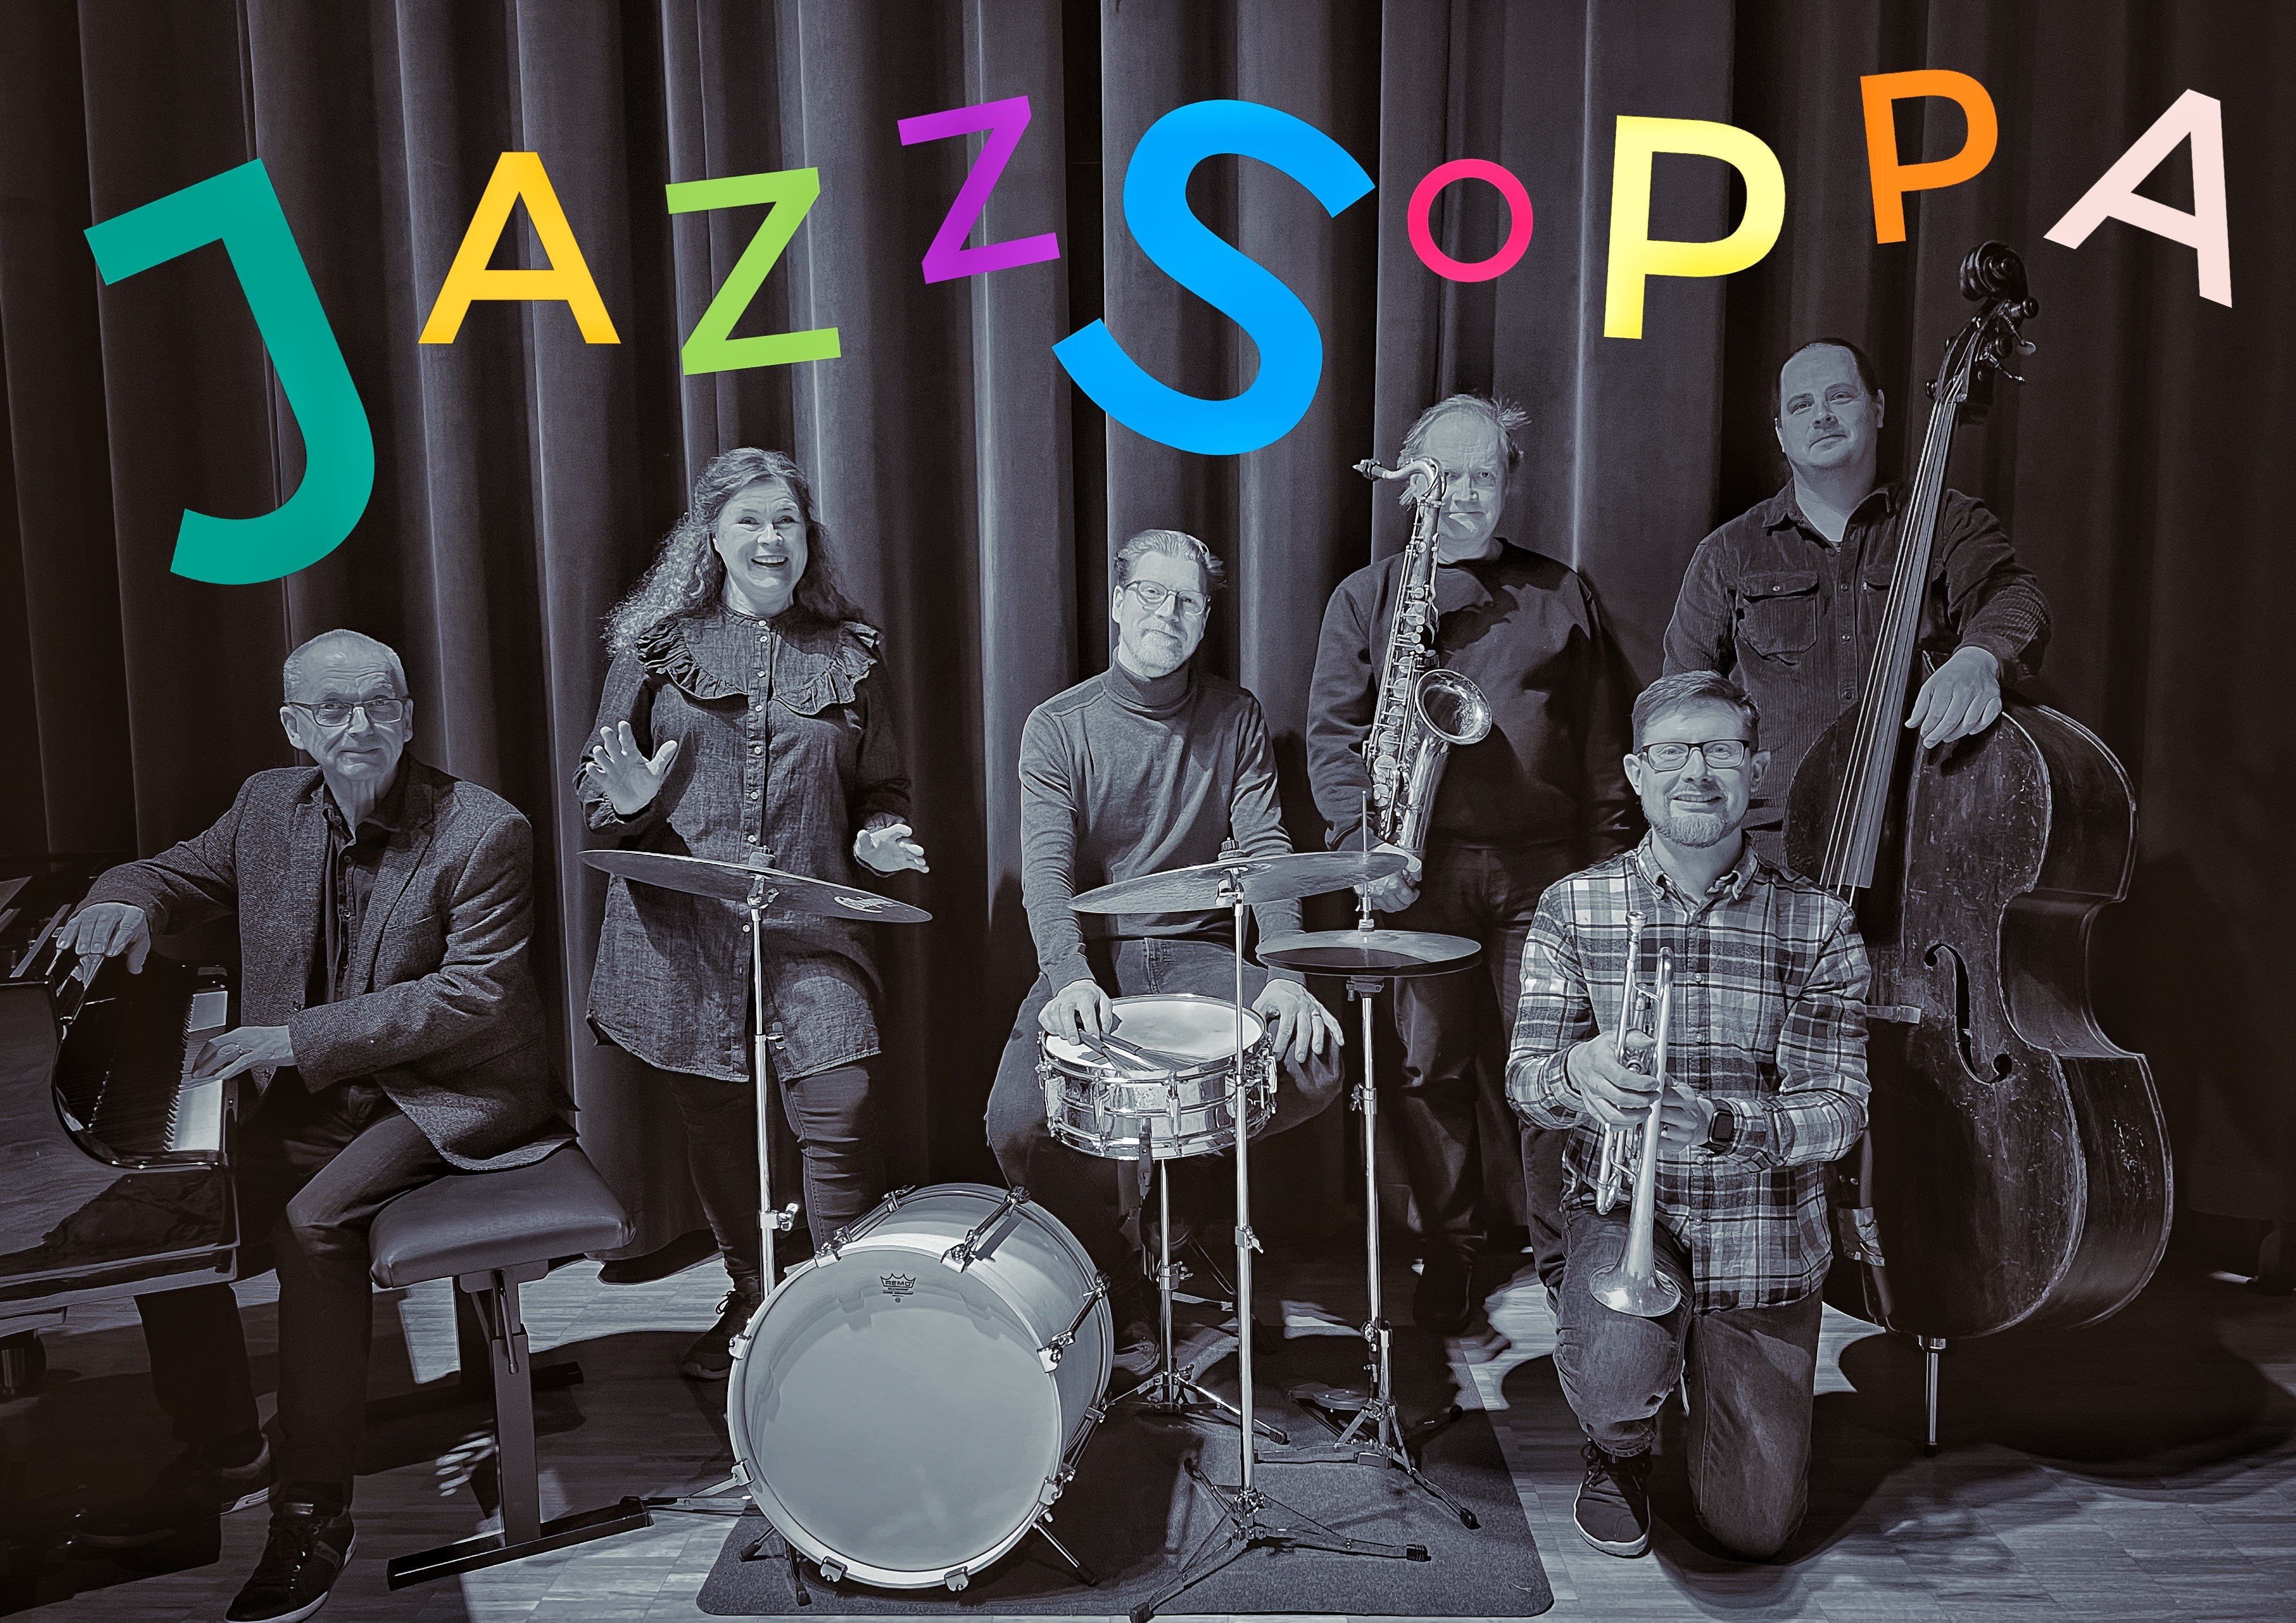 JazzSoppa